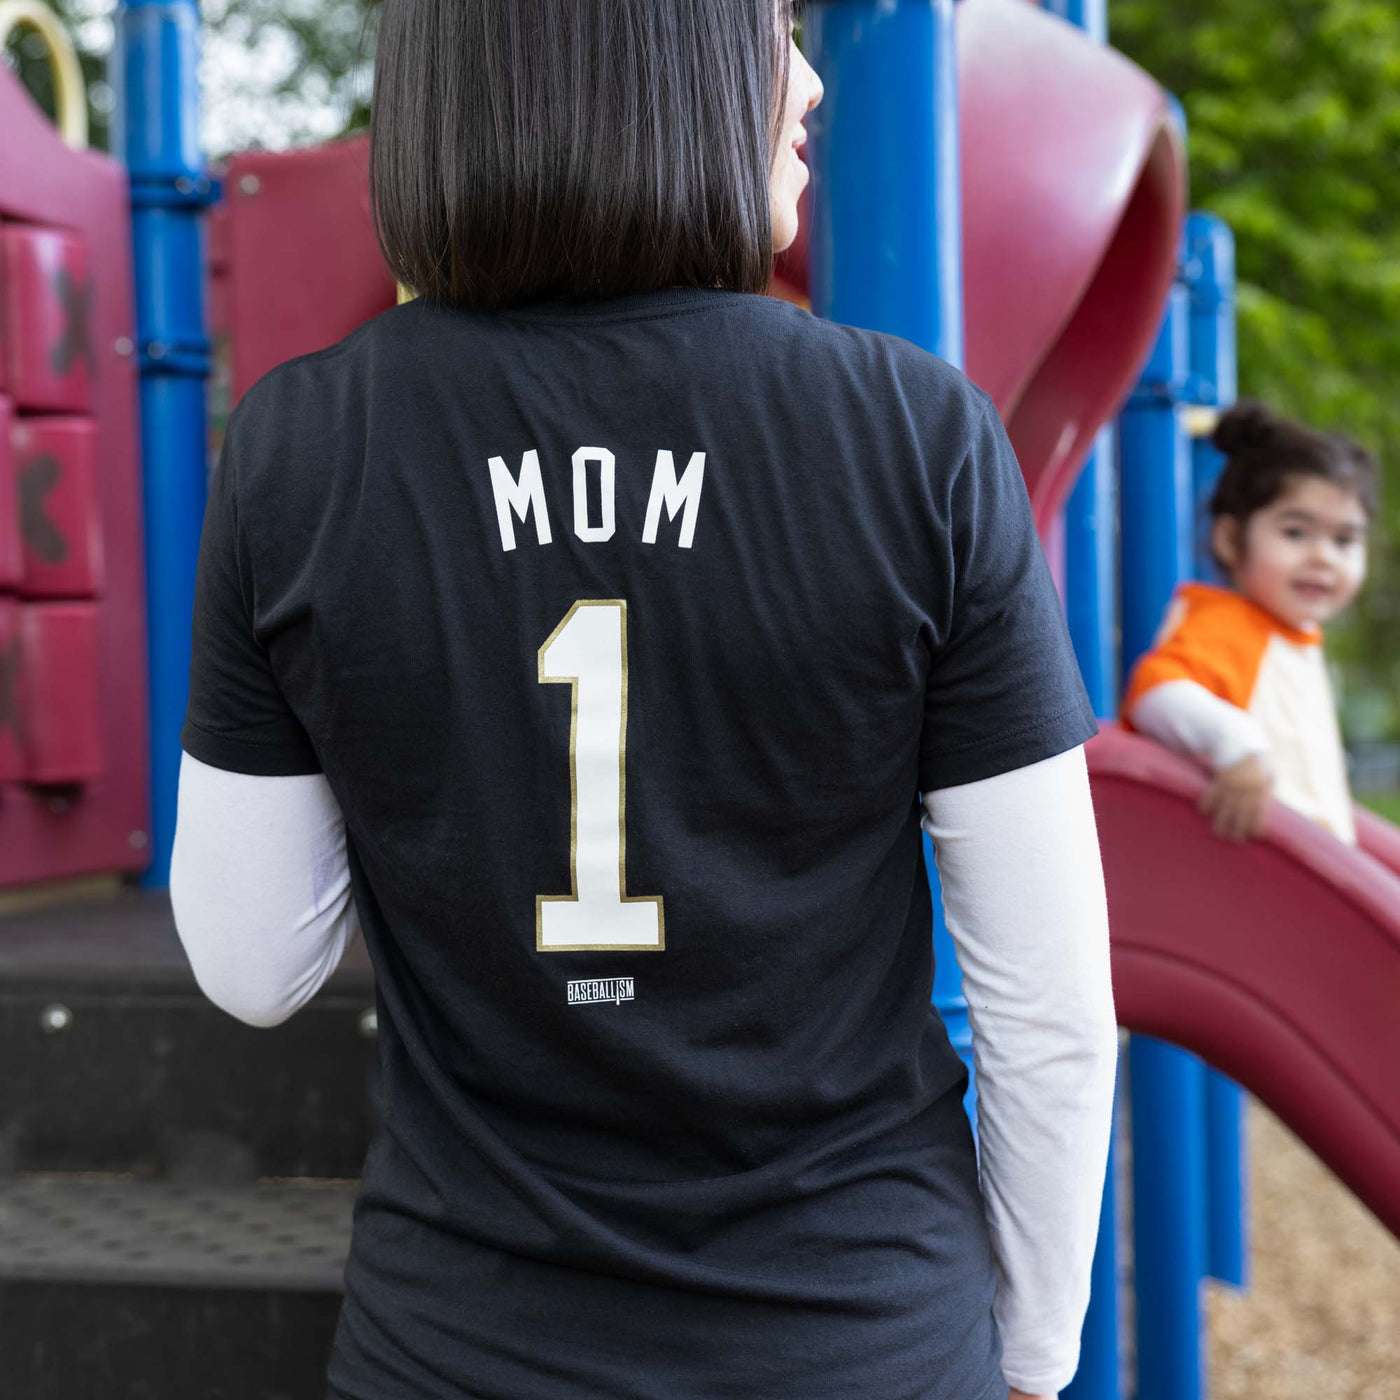 Mom's Number One - Camiseta de calentamiento para mujer